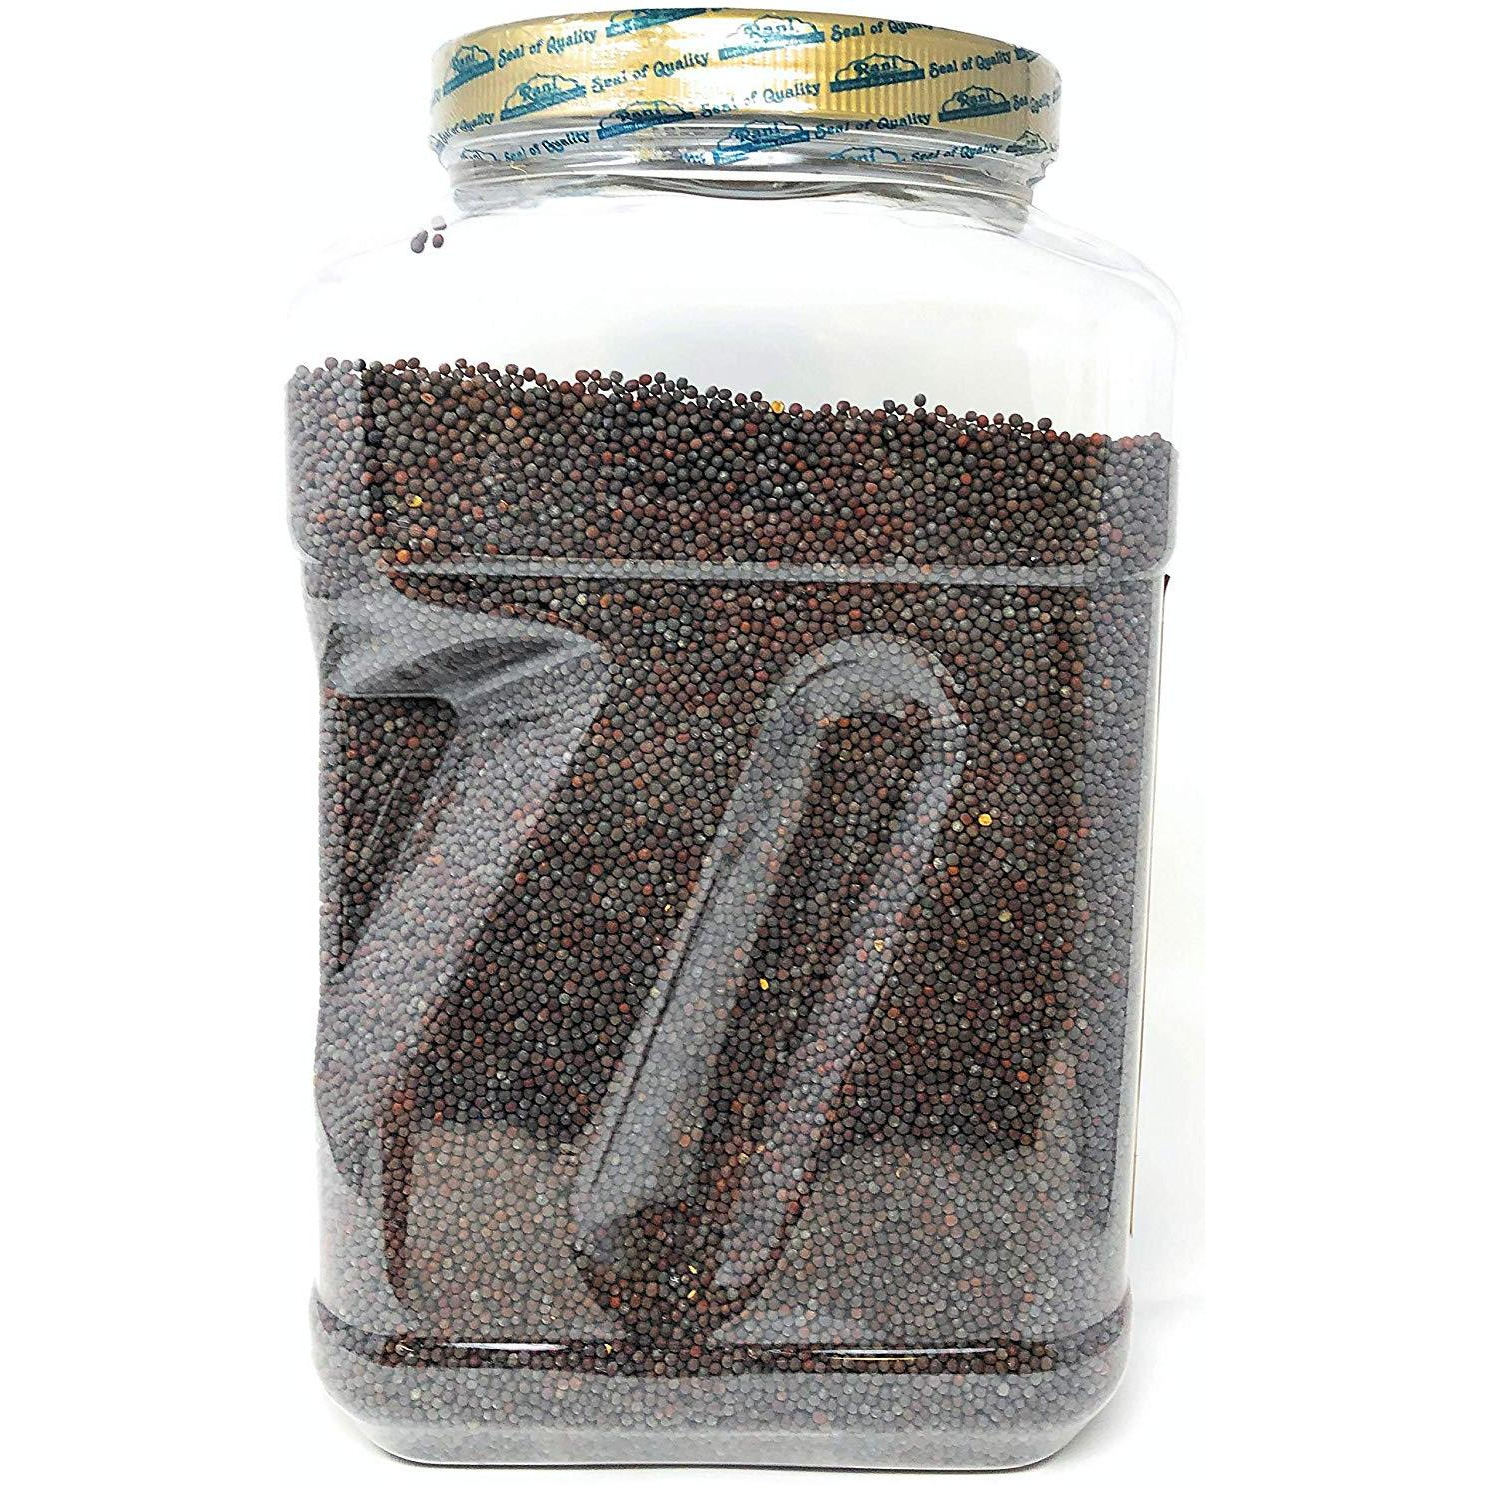 Rani Black Mustard Seeds Whole Spice (Rai Sarson) 80oz (5lbs) Bulk PET Jar, All Natural ~ Gluten Free Ingredients | NON-GMO | Vegan | Indian Origin